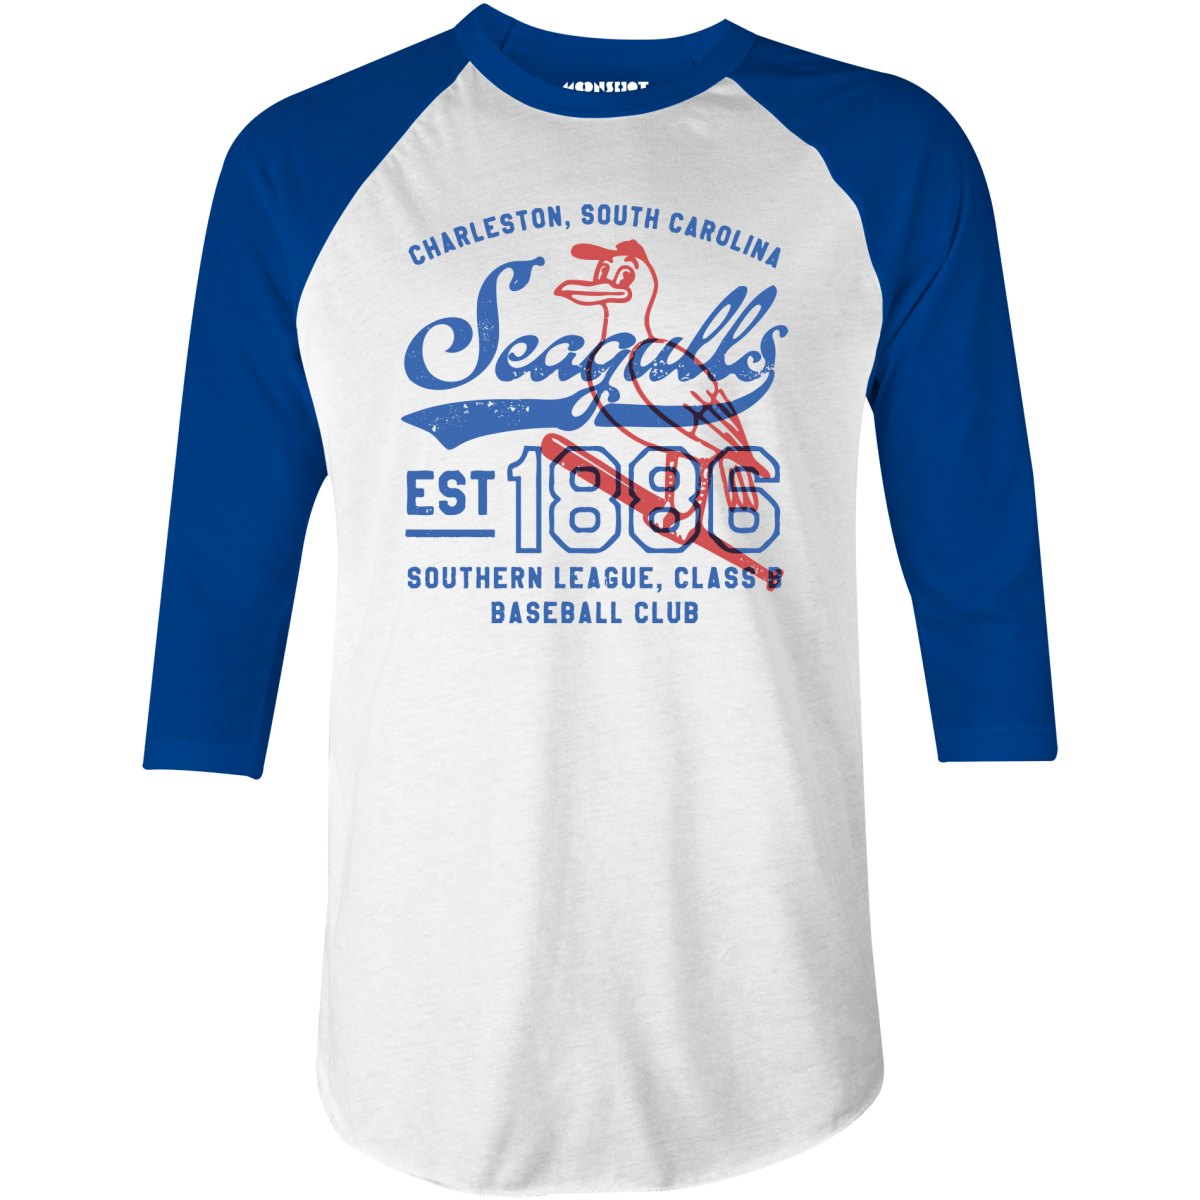 Charleston Seagulls - South Carolina - Vintage Defunct Baseball Teams - 3/4 Sleeve Raglan T-Shirt